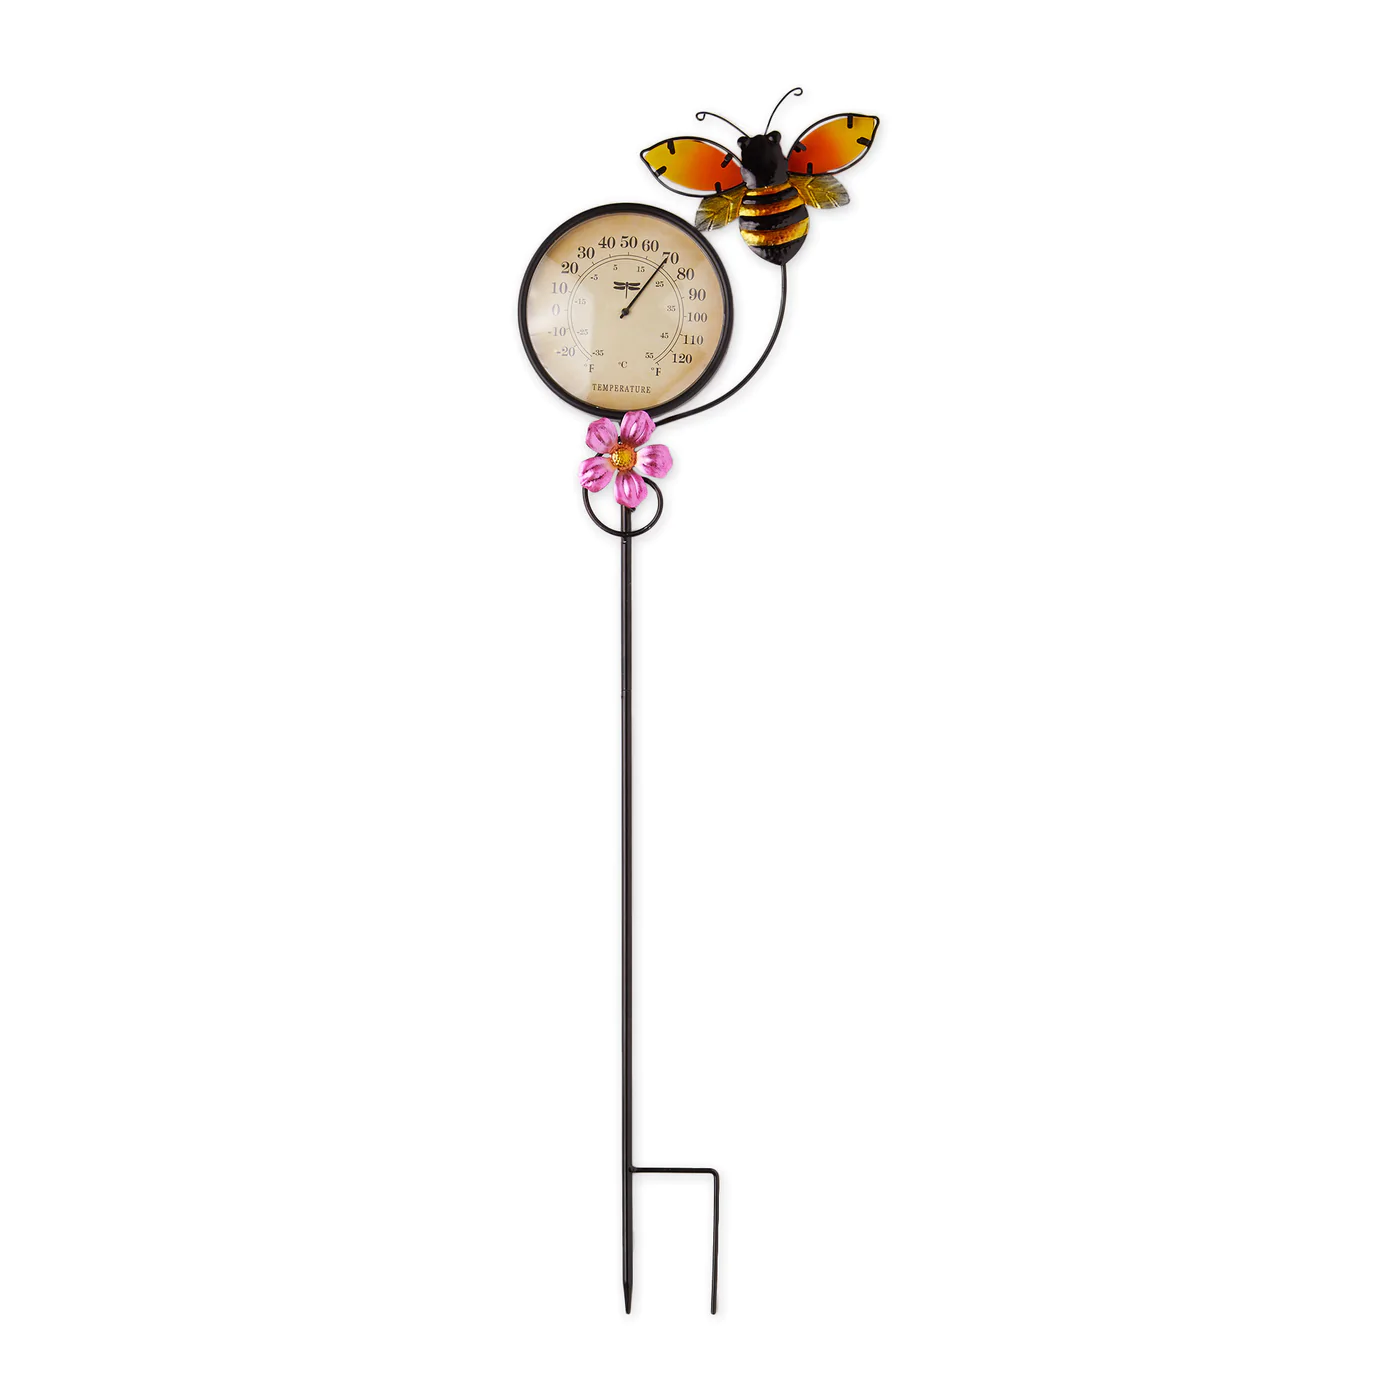 Thermometer Garden Stake - Garden Bee - $33.92